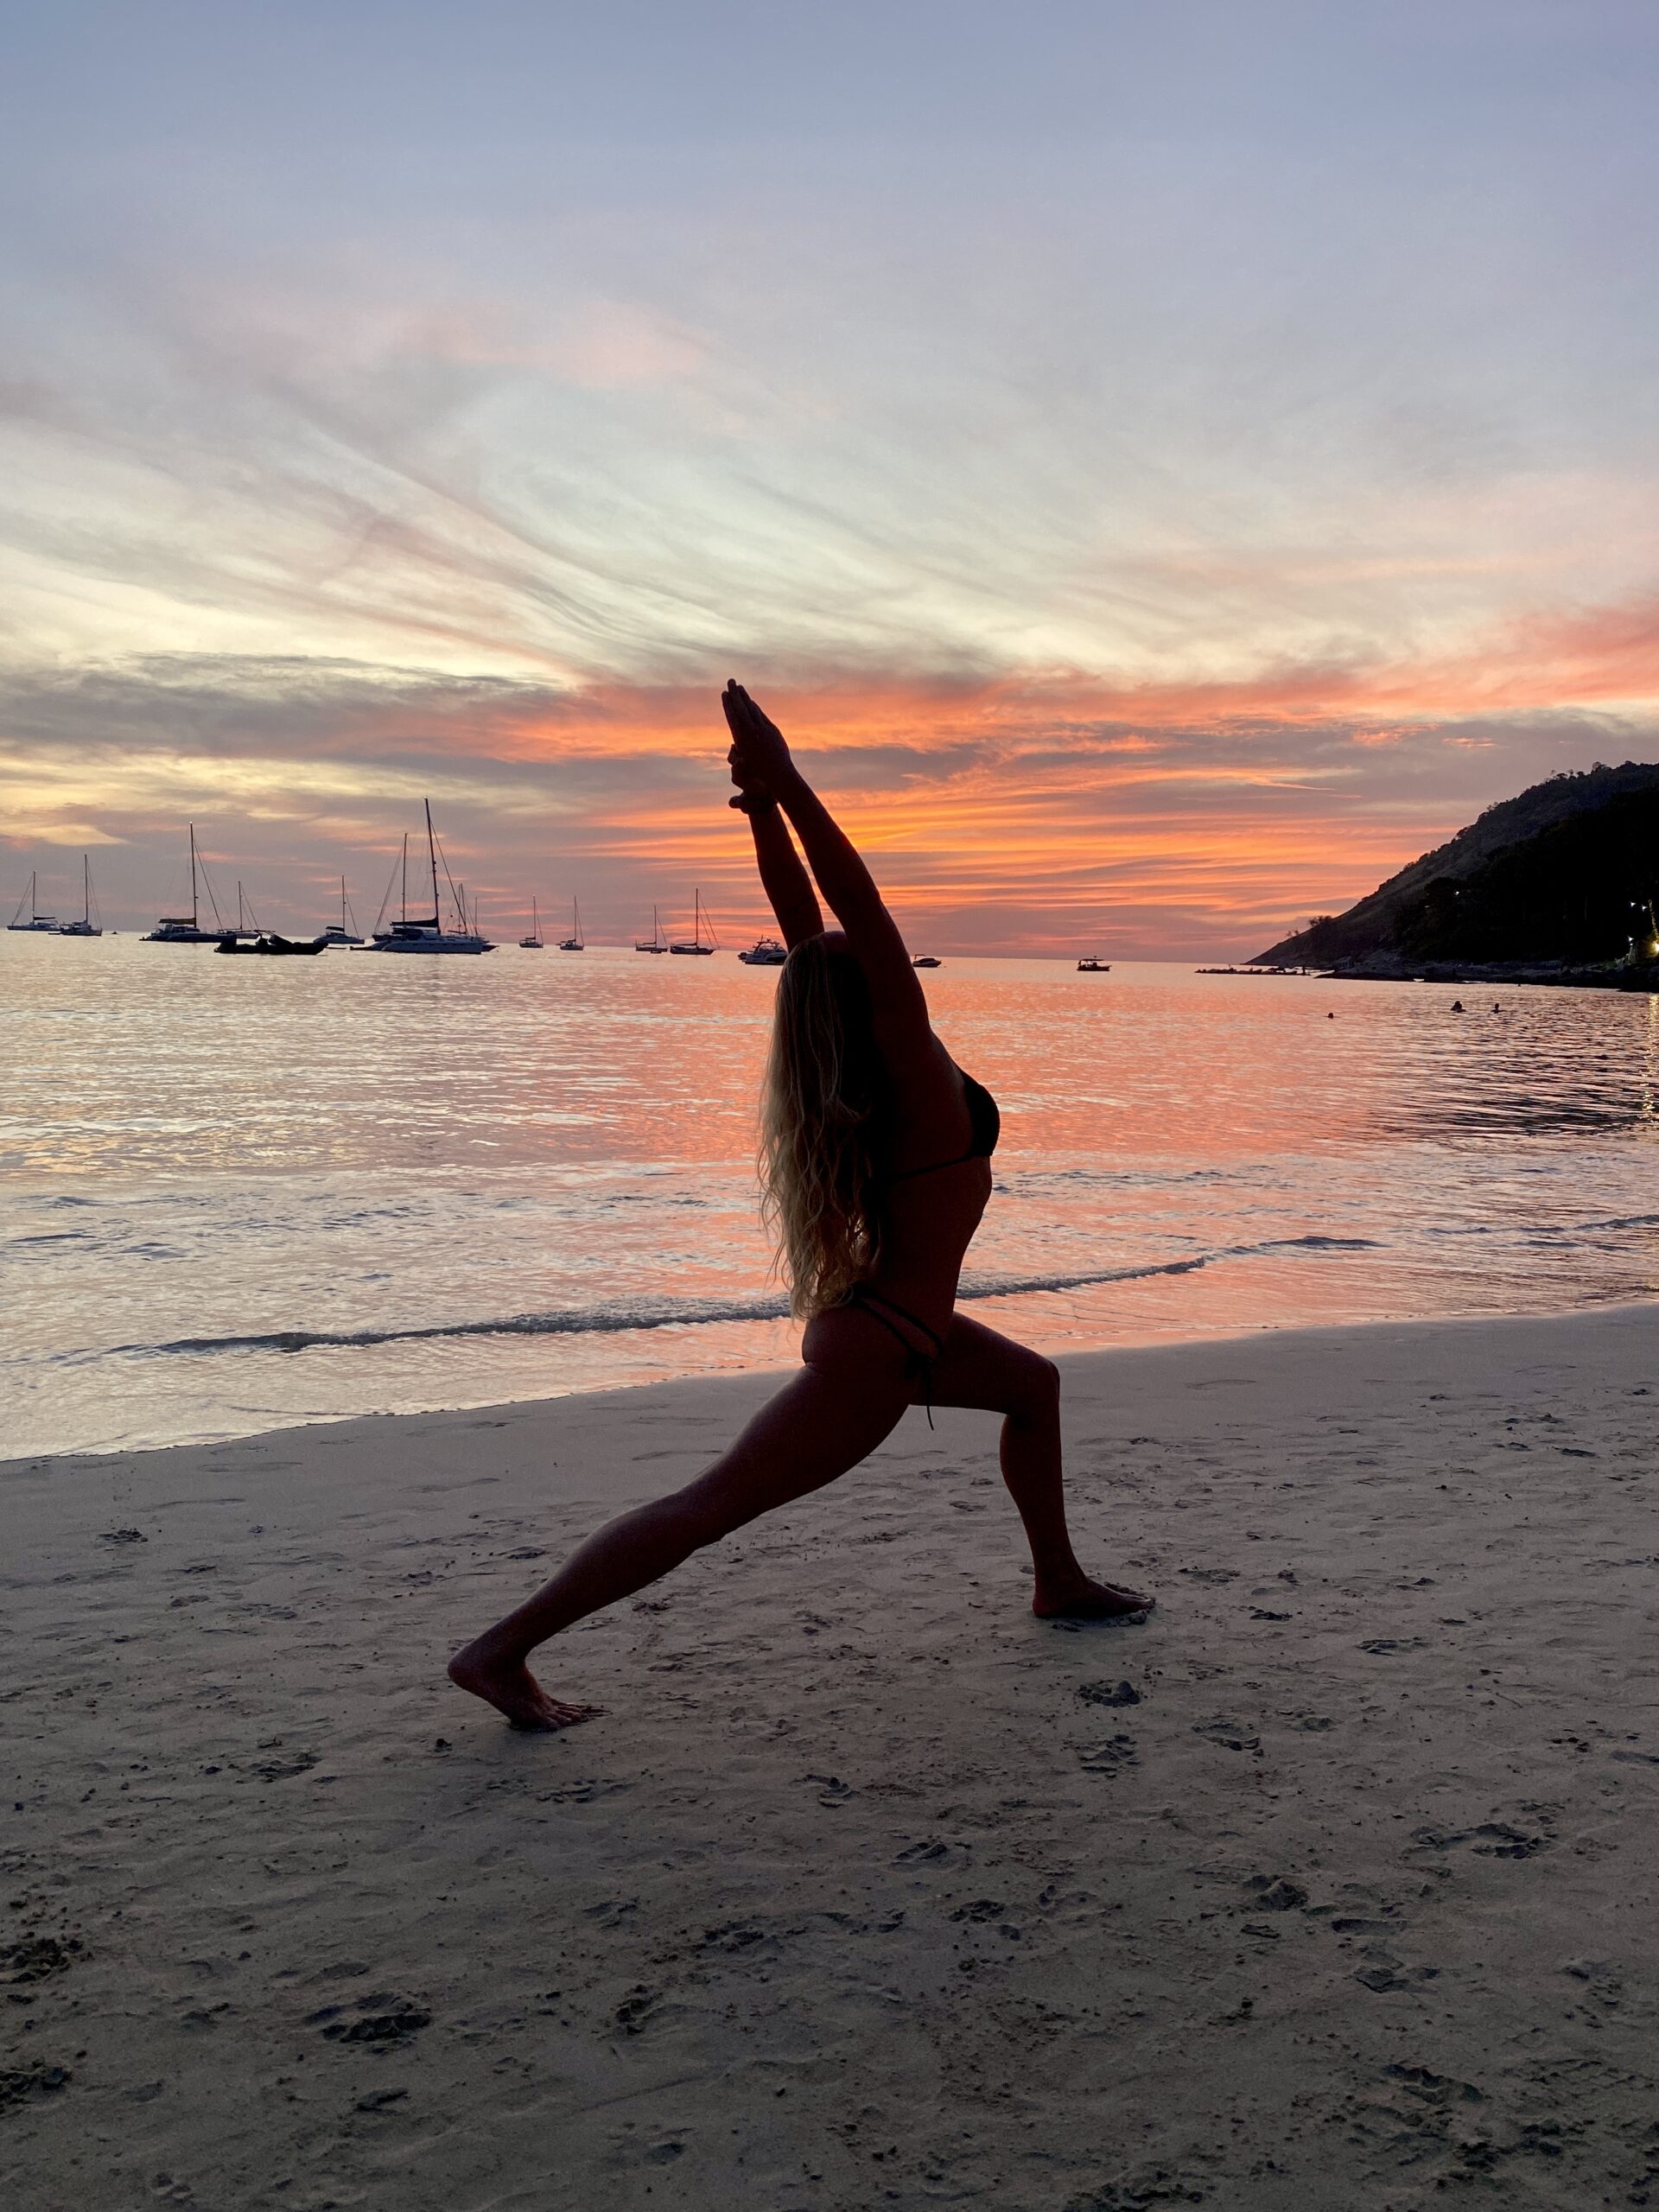 Sunset Yoga